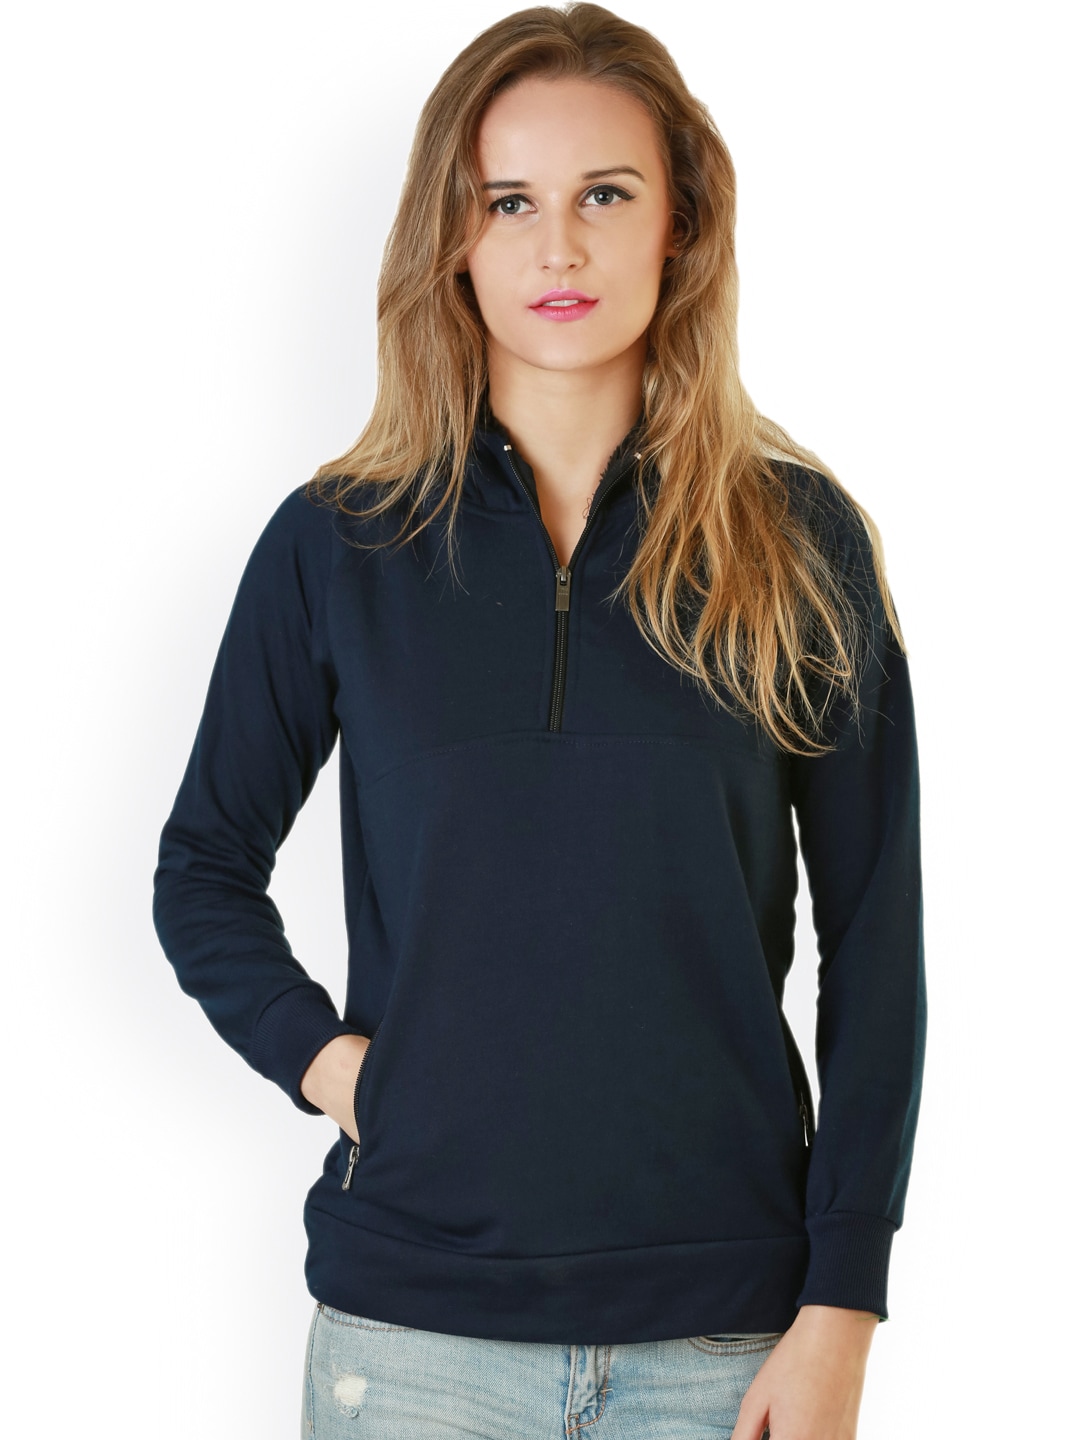 Belle Fille Navy Hooded Sweatshirt Price in India